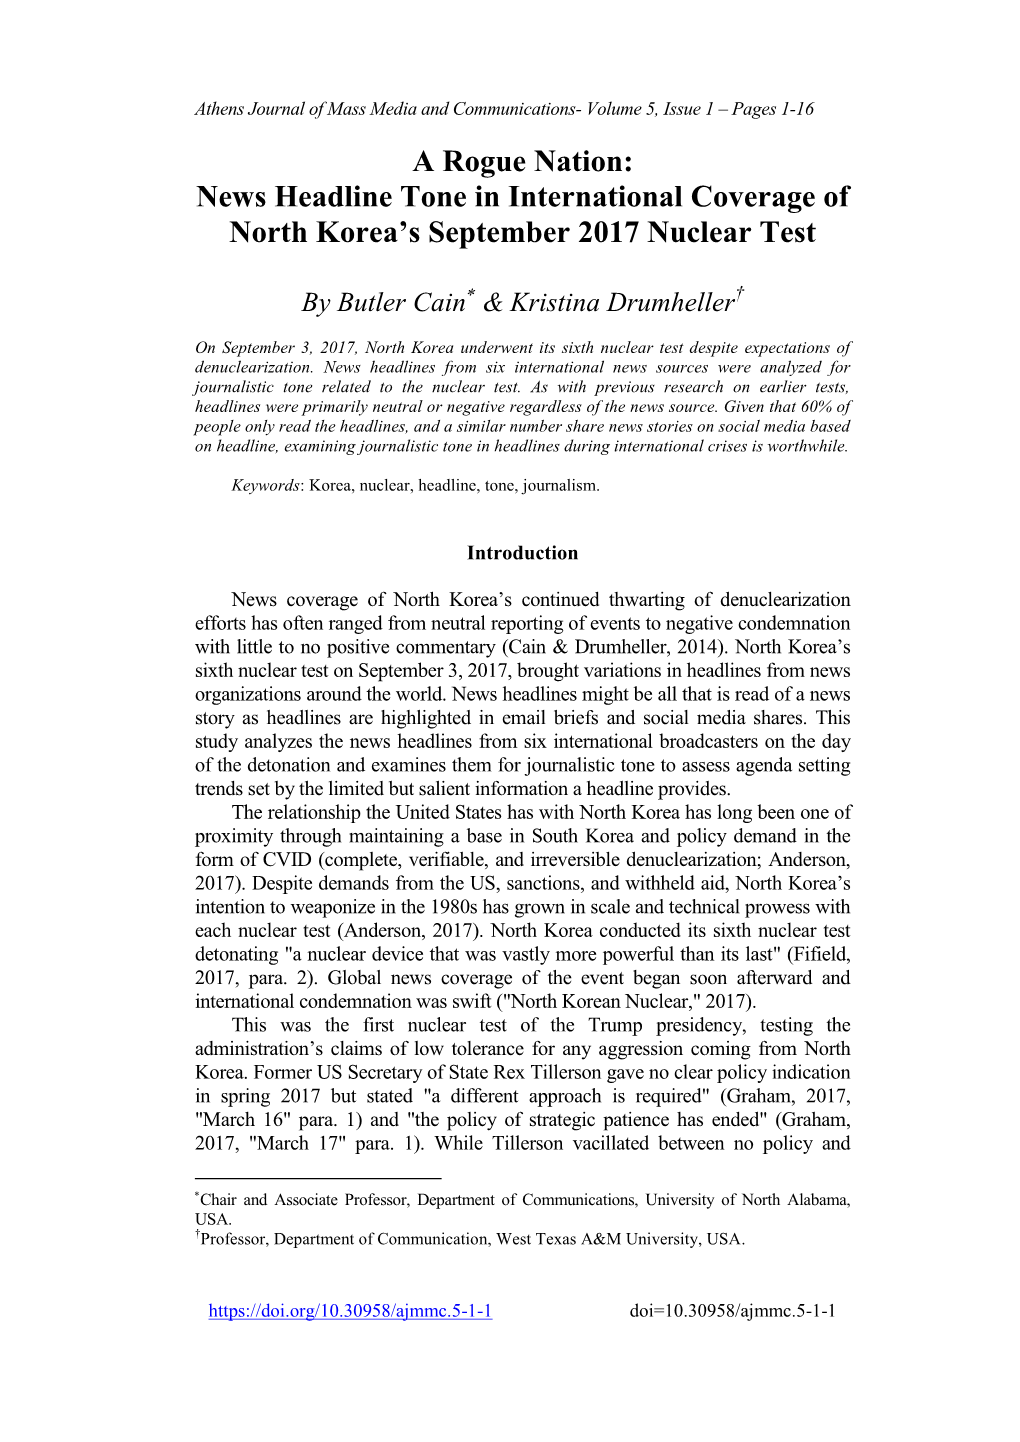 News Headline Tone in International Coverage of North Korea's September 2017 Nuclear Test